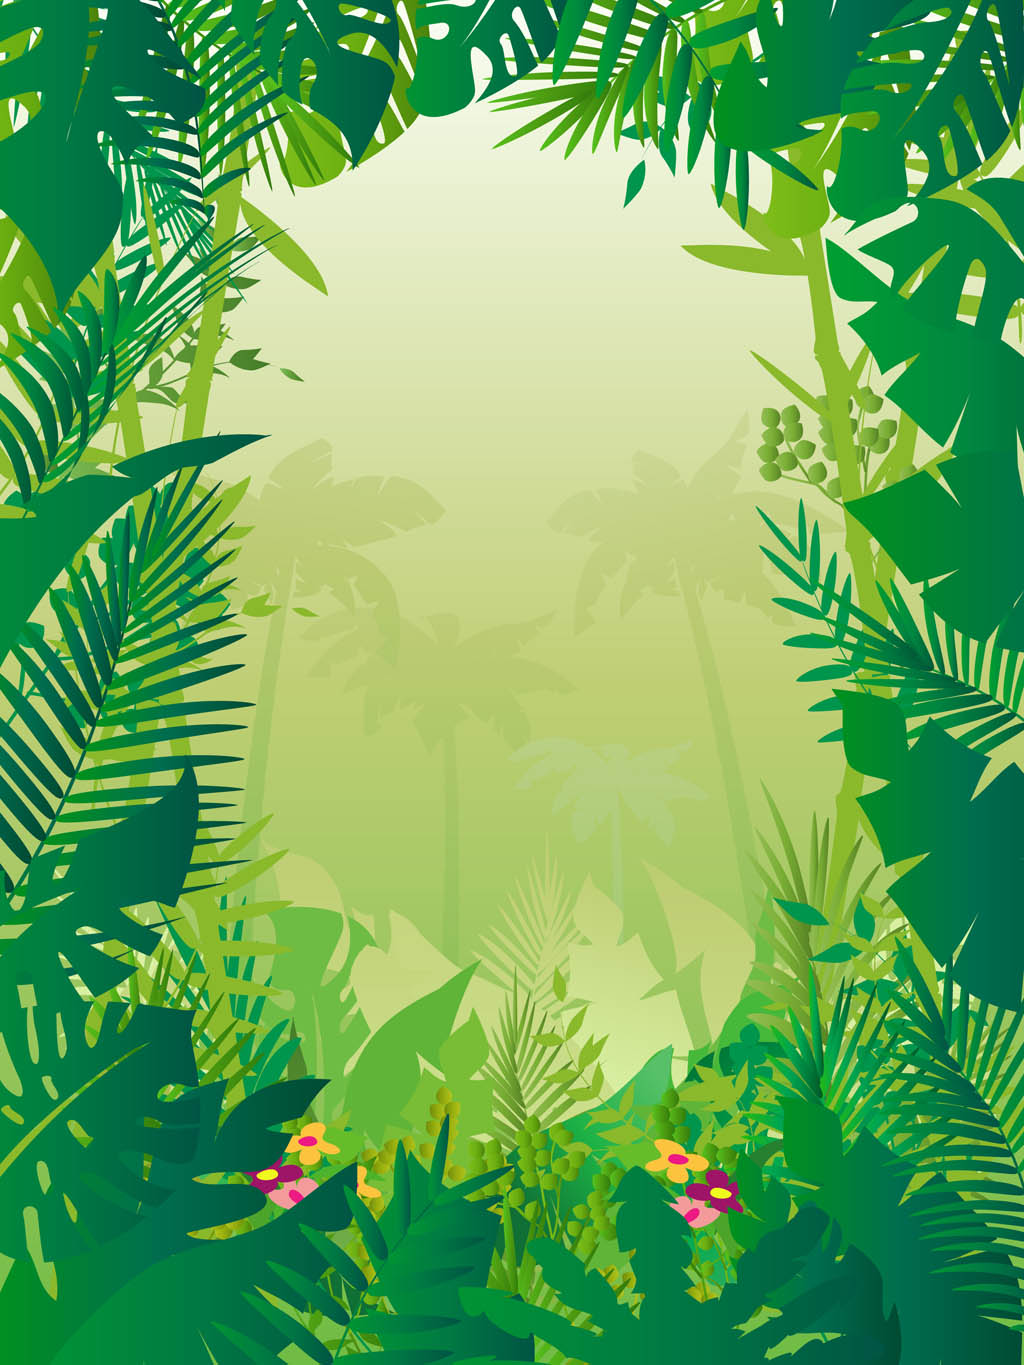 Jungle Background Vector Art & Graphics | freevector.com